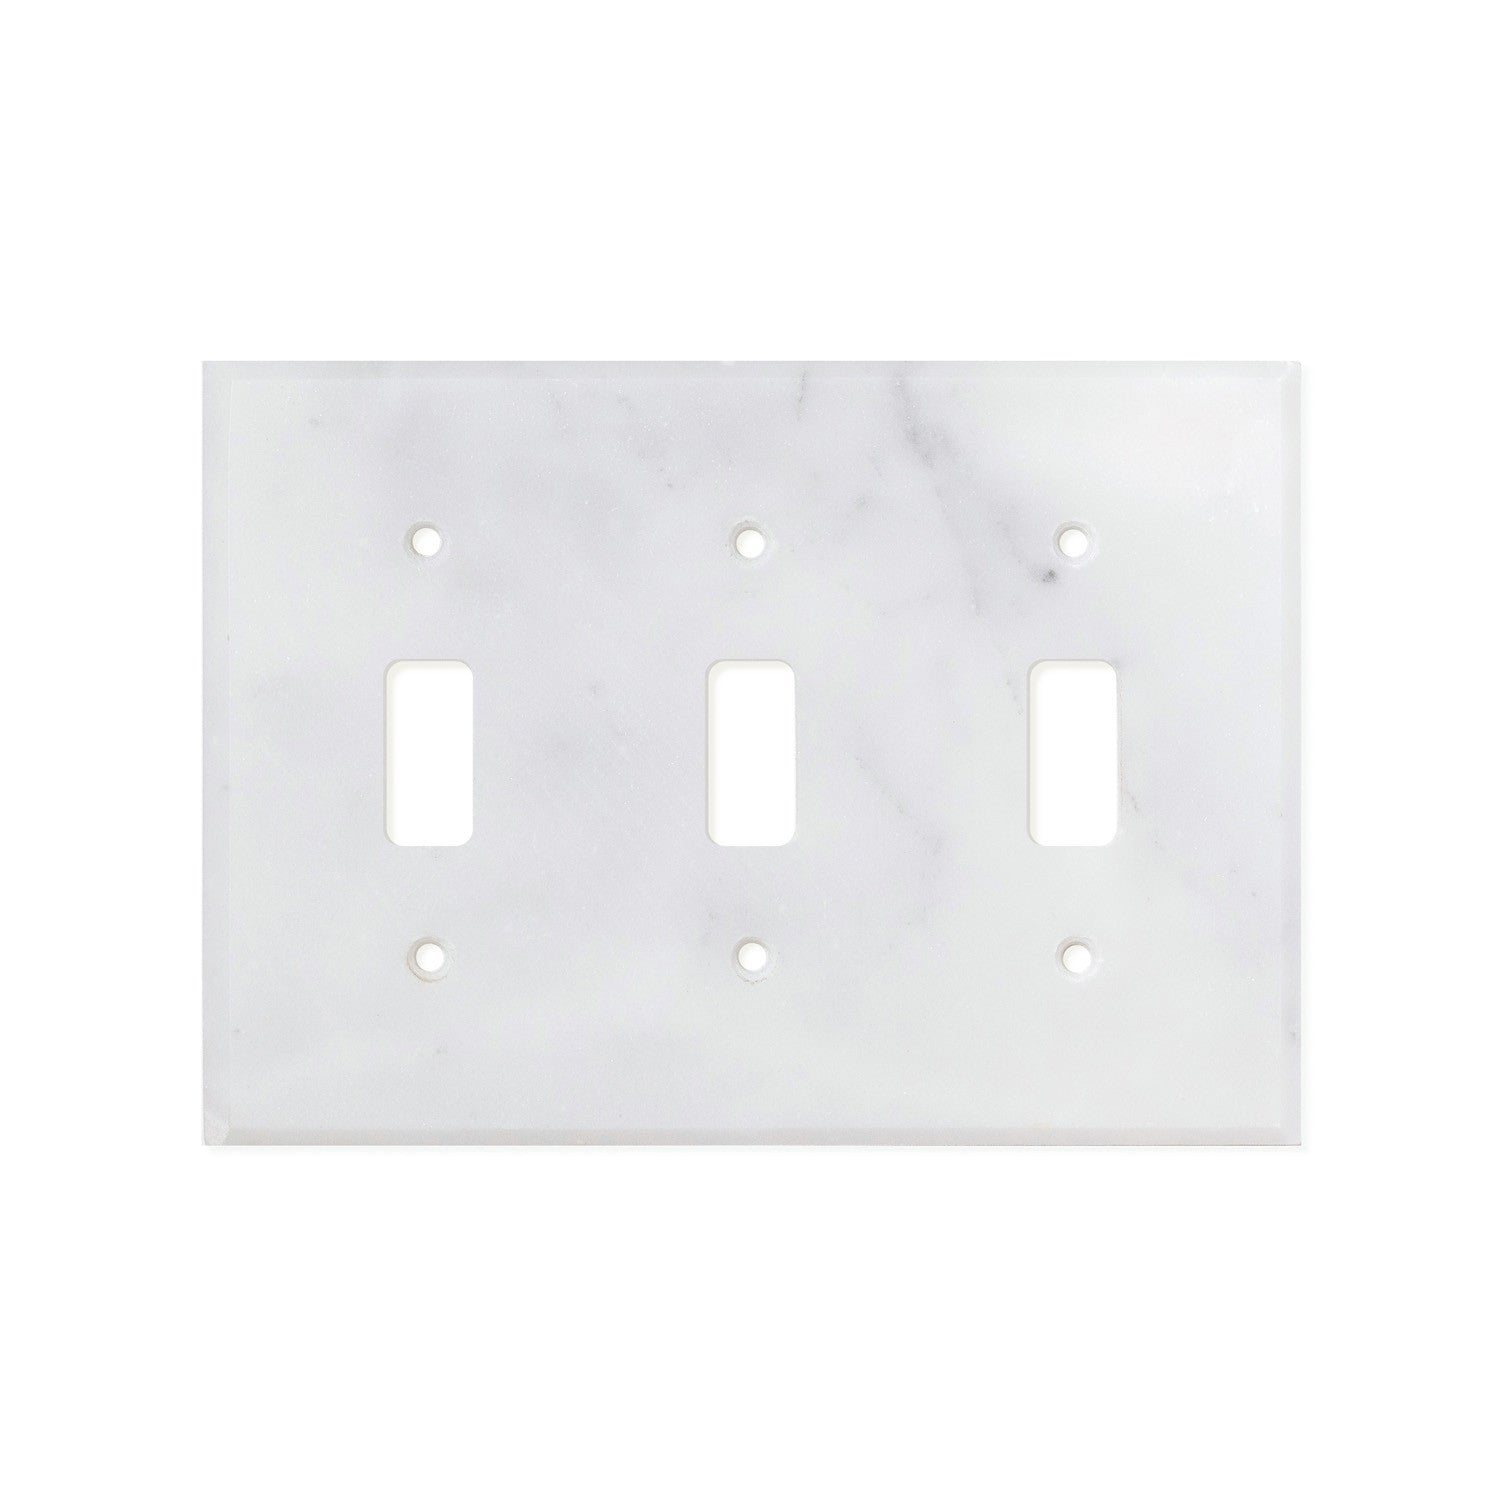 Bianco Carrara (Carrara White) Marble Switch Plate Cover, Honed (3 TOGGLE) - Tilephile